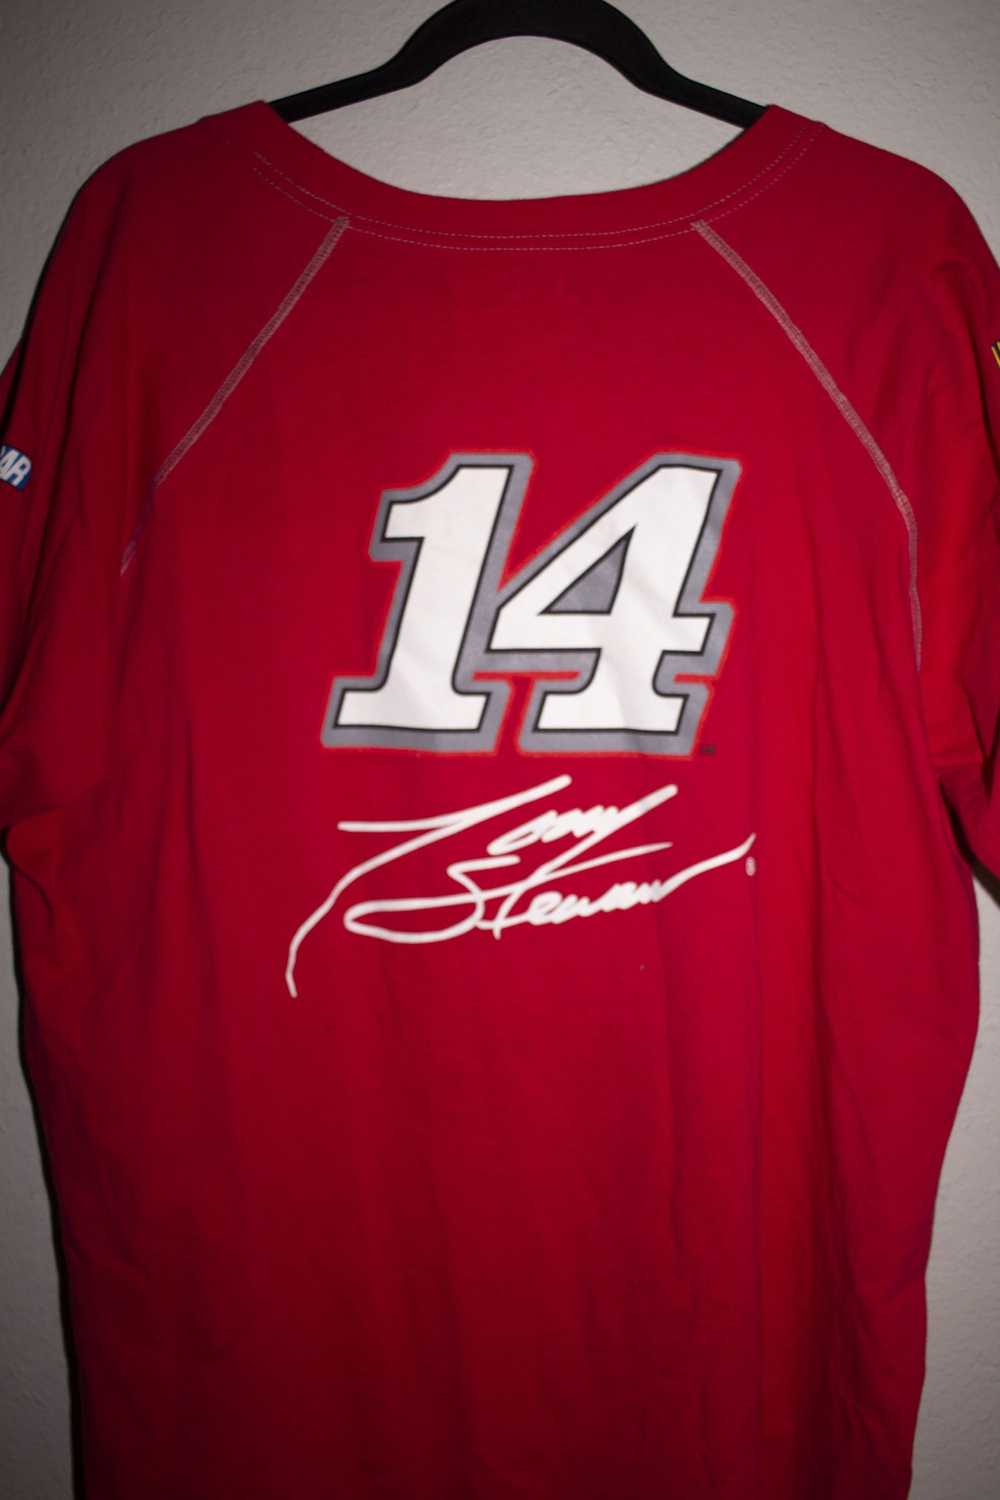 NASCAR Tony Stewart Sponsor T-Shirt - image 2